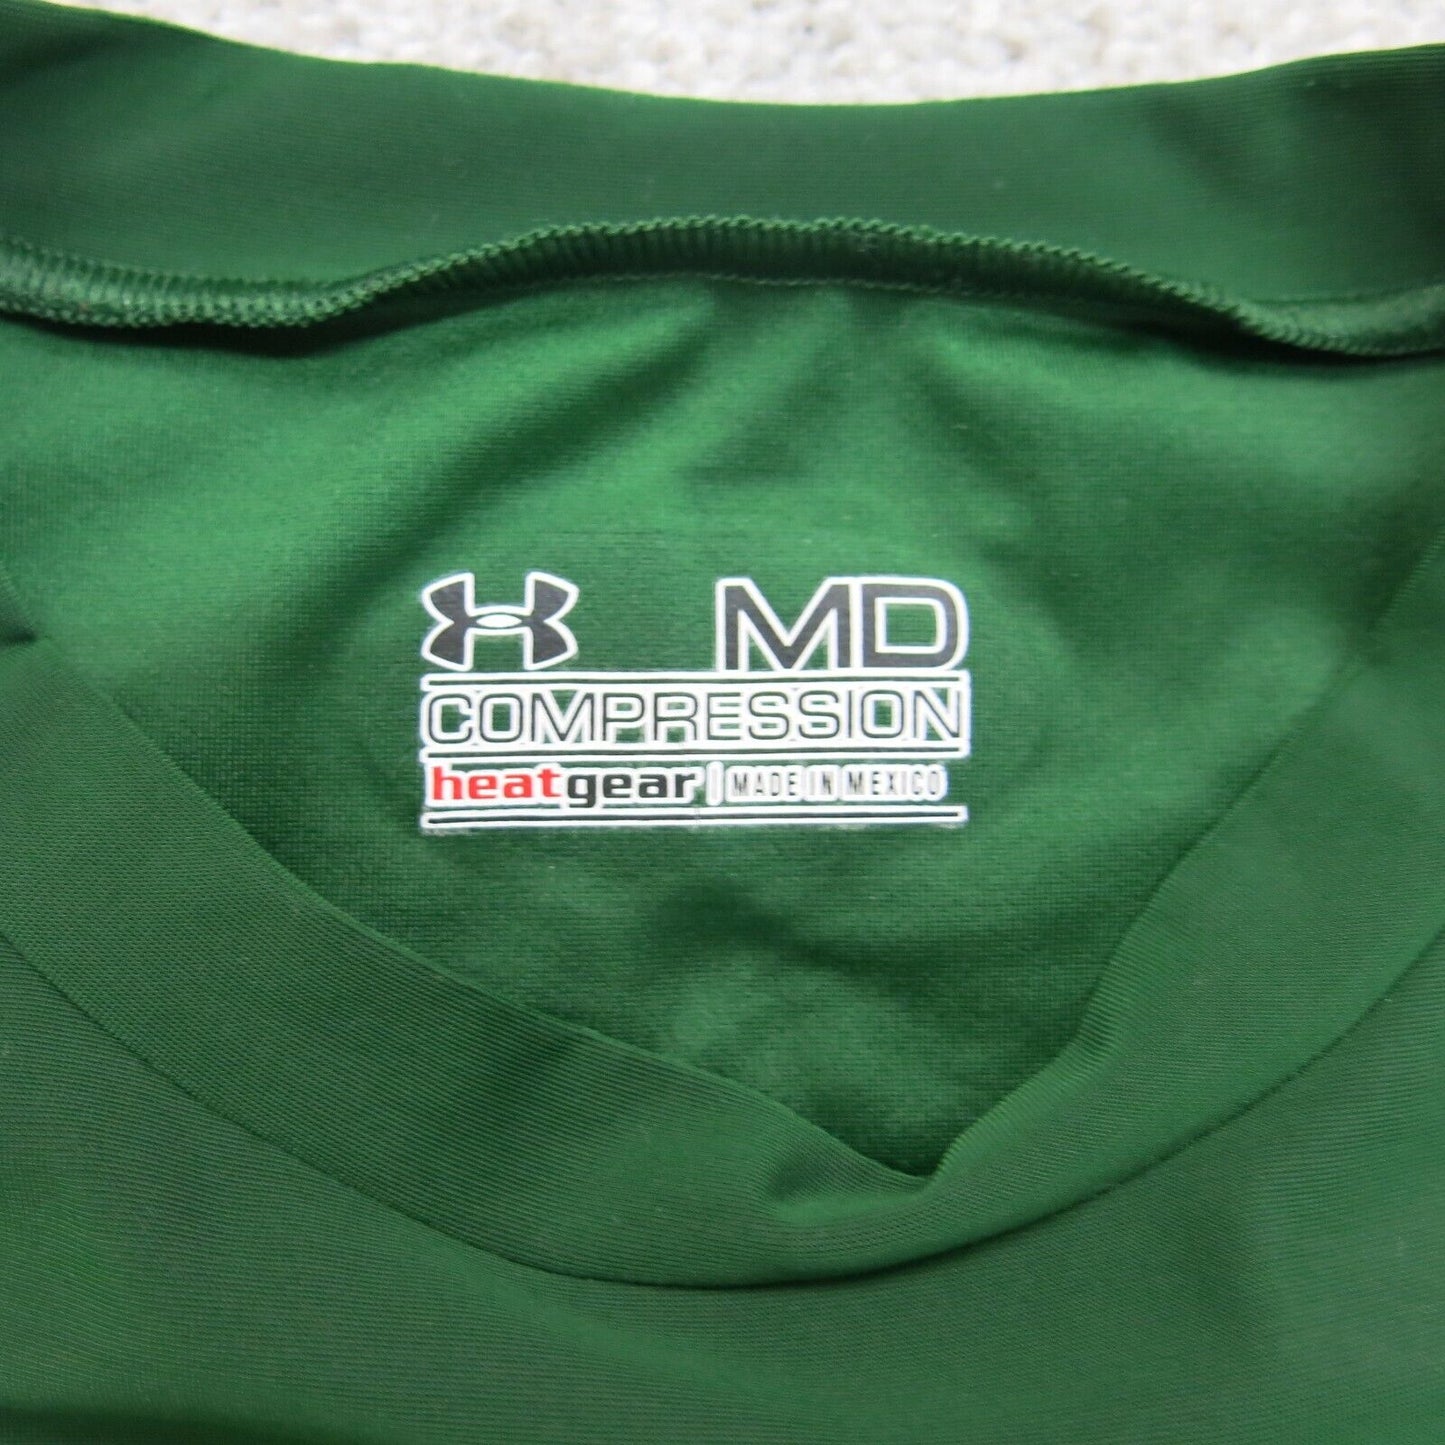 Under Armour Womens Sweatshirt Top Long Sleeves Compression Heatgear Green SZ MD